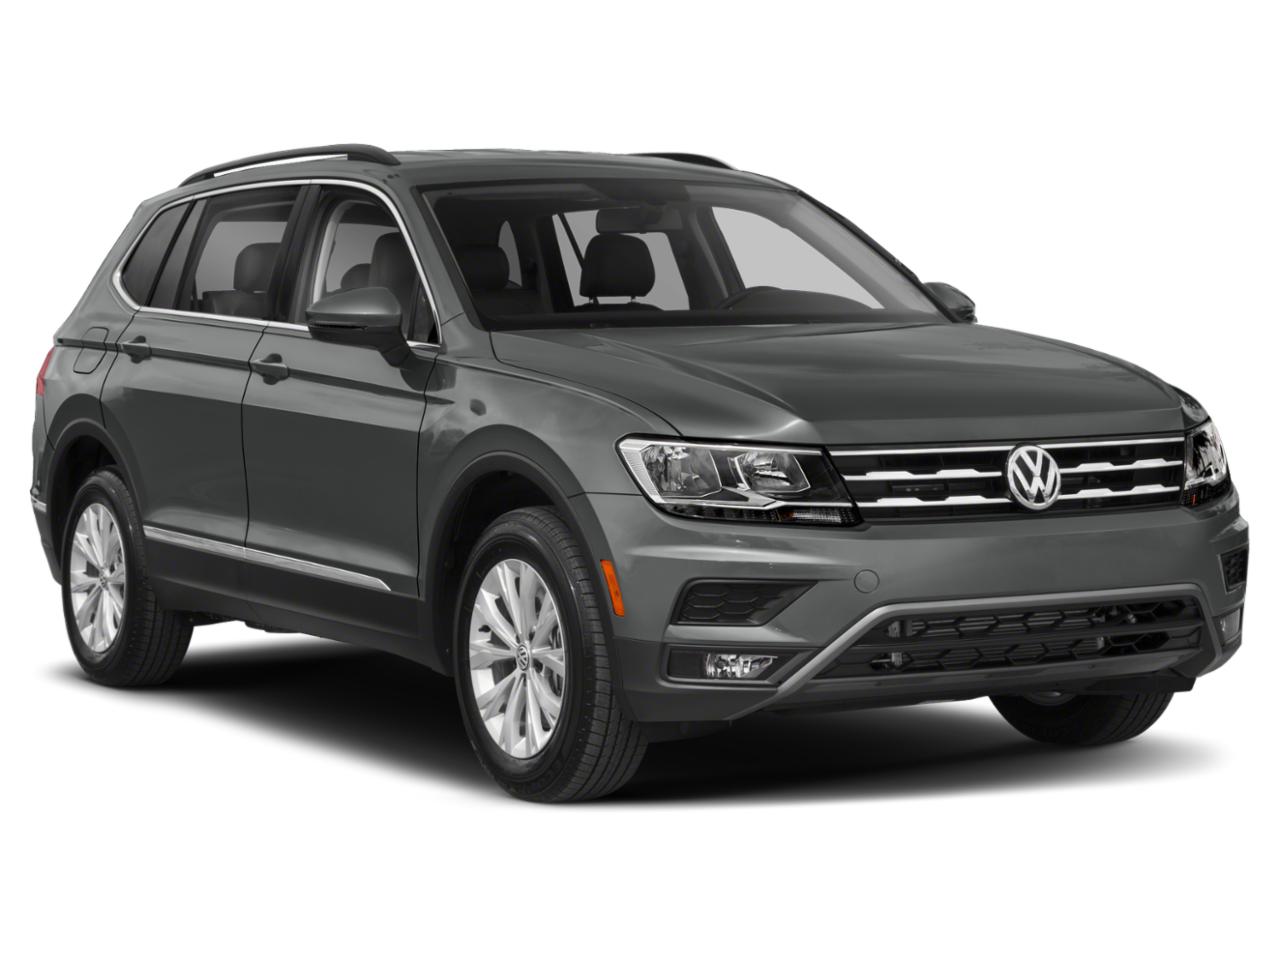 Platinum Gray Metallic 2020 Volkswagen Tiguan for Sale at